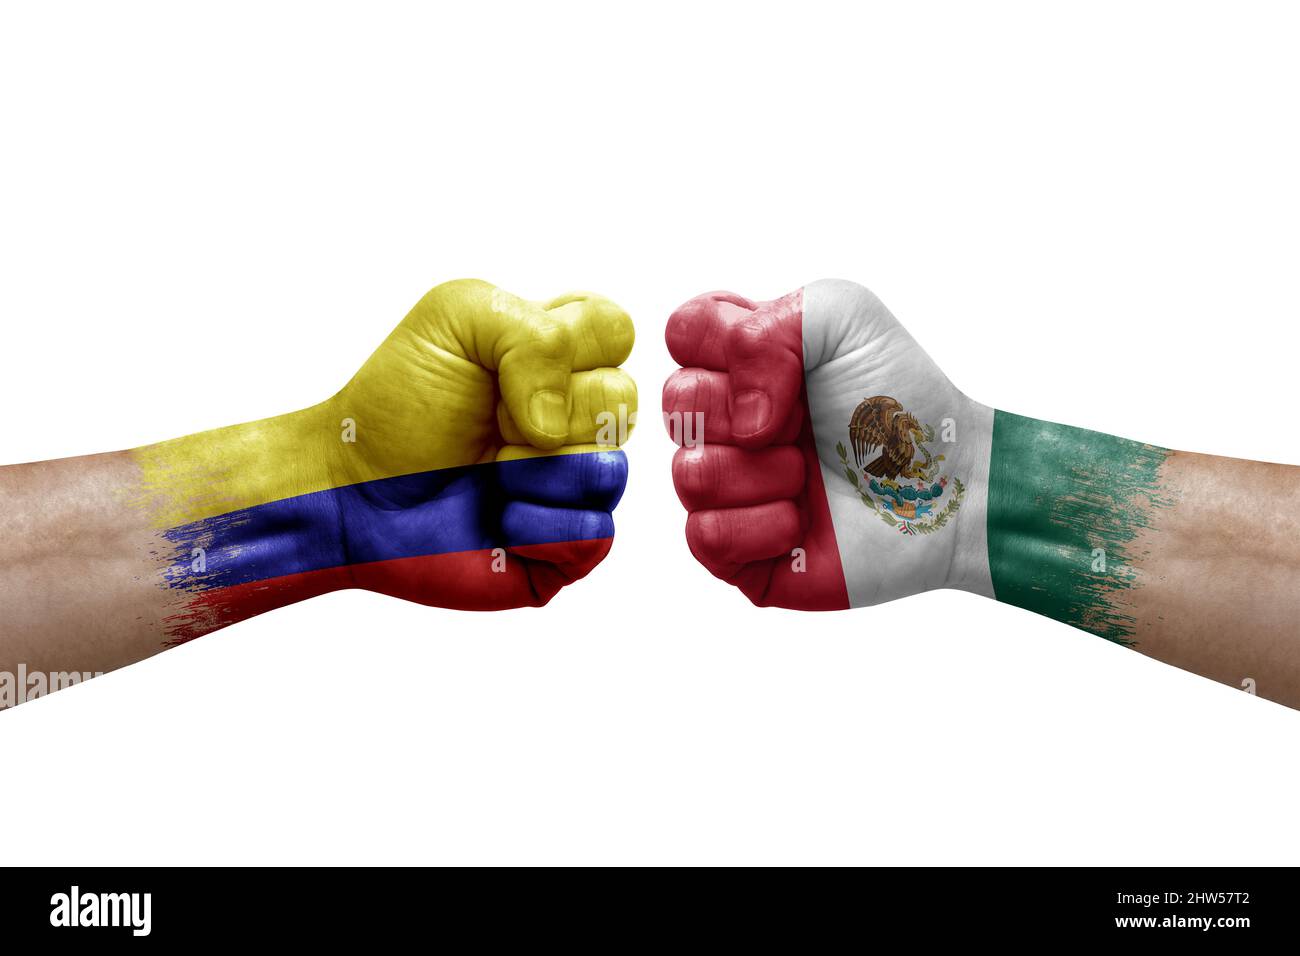 México vs Colombia (pais): Últimas noticias, videos y fotos de México vs  Colombia (pais)